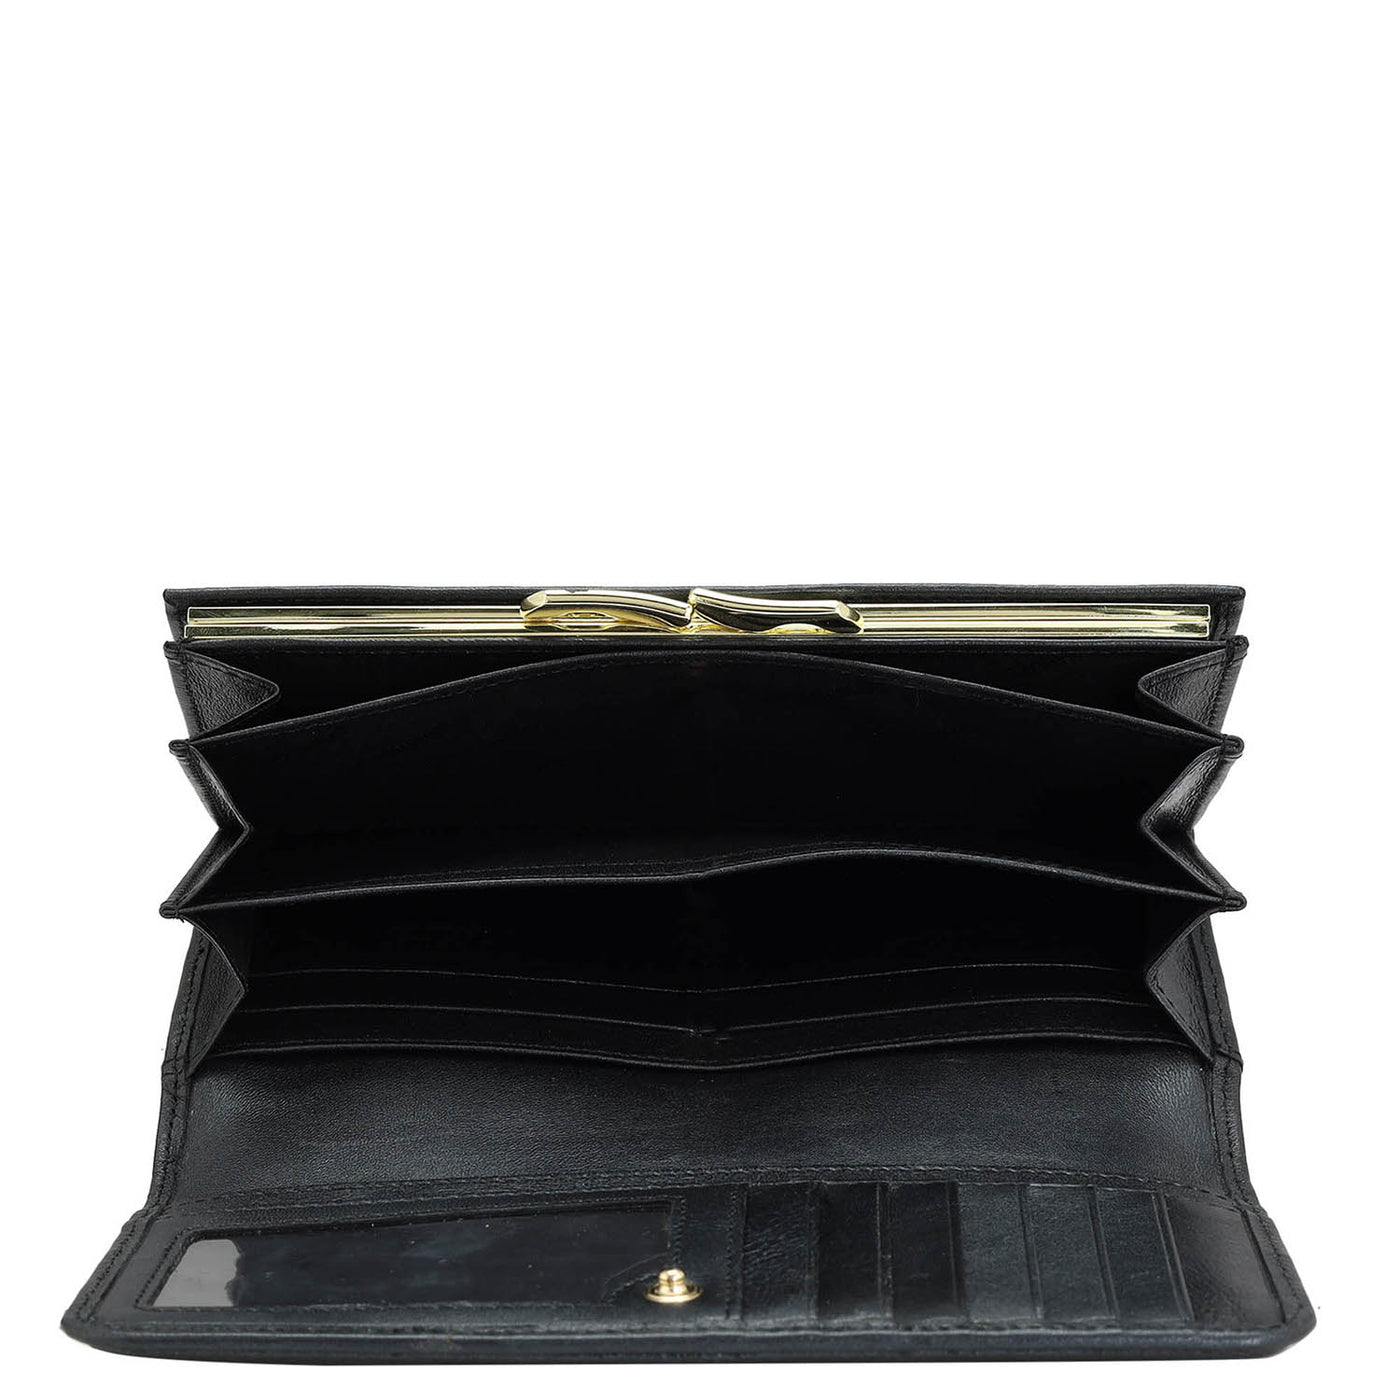 Quilting Plain Leather Ladies Wallet - Black